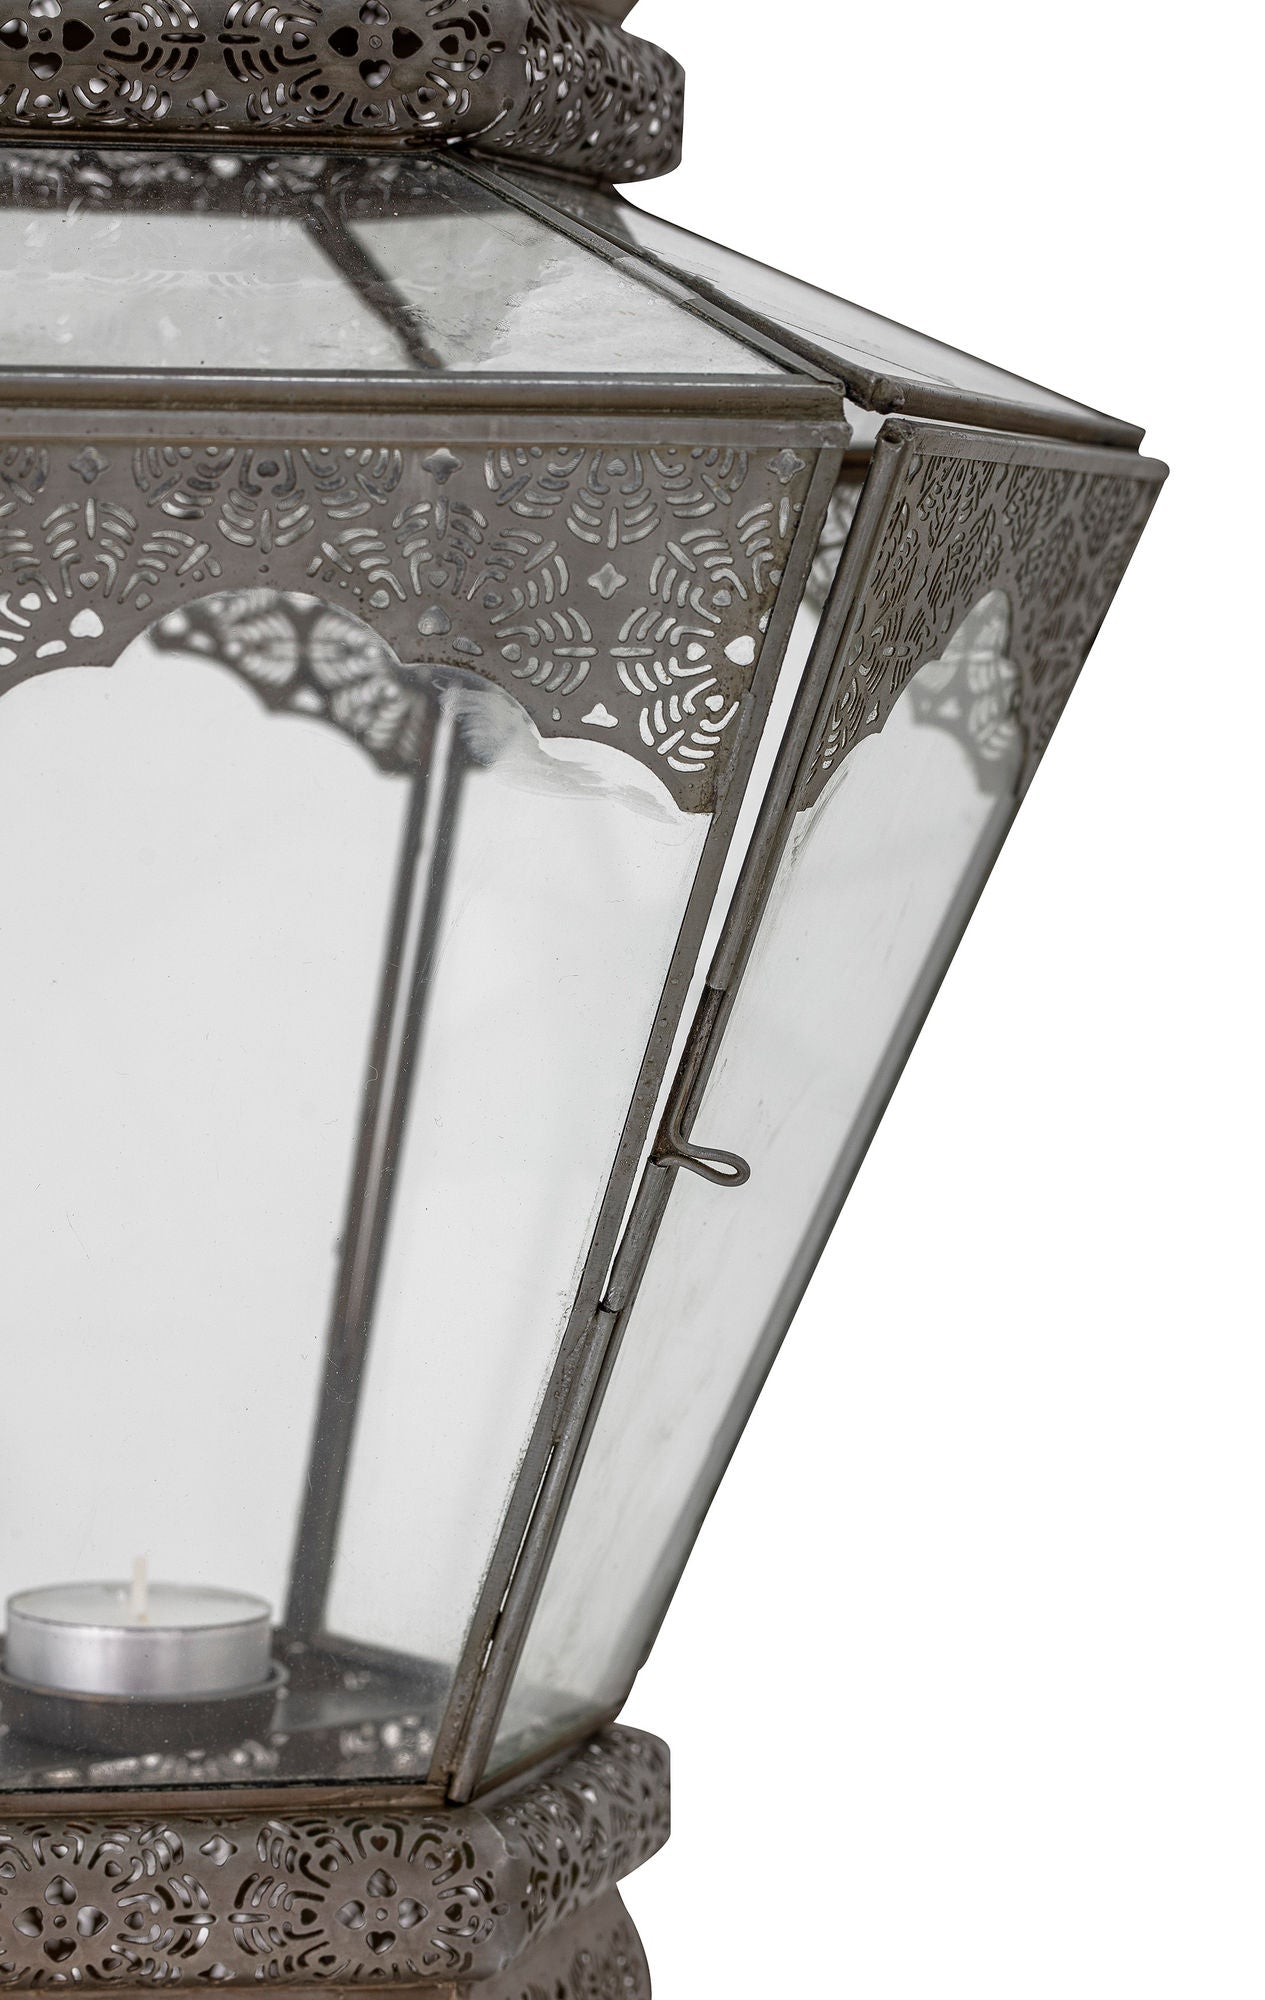 Lanterna di Bloomingville Isabell, grigio, vetro